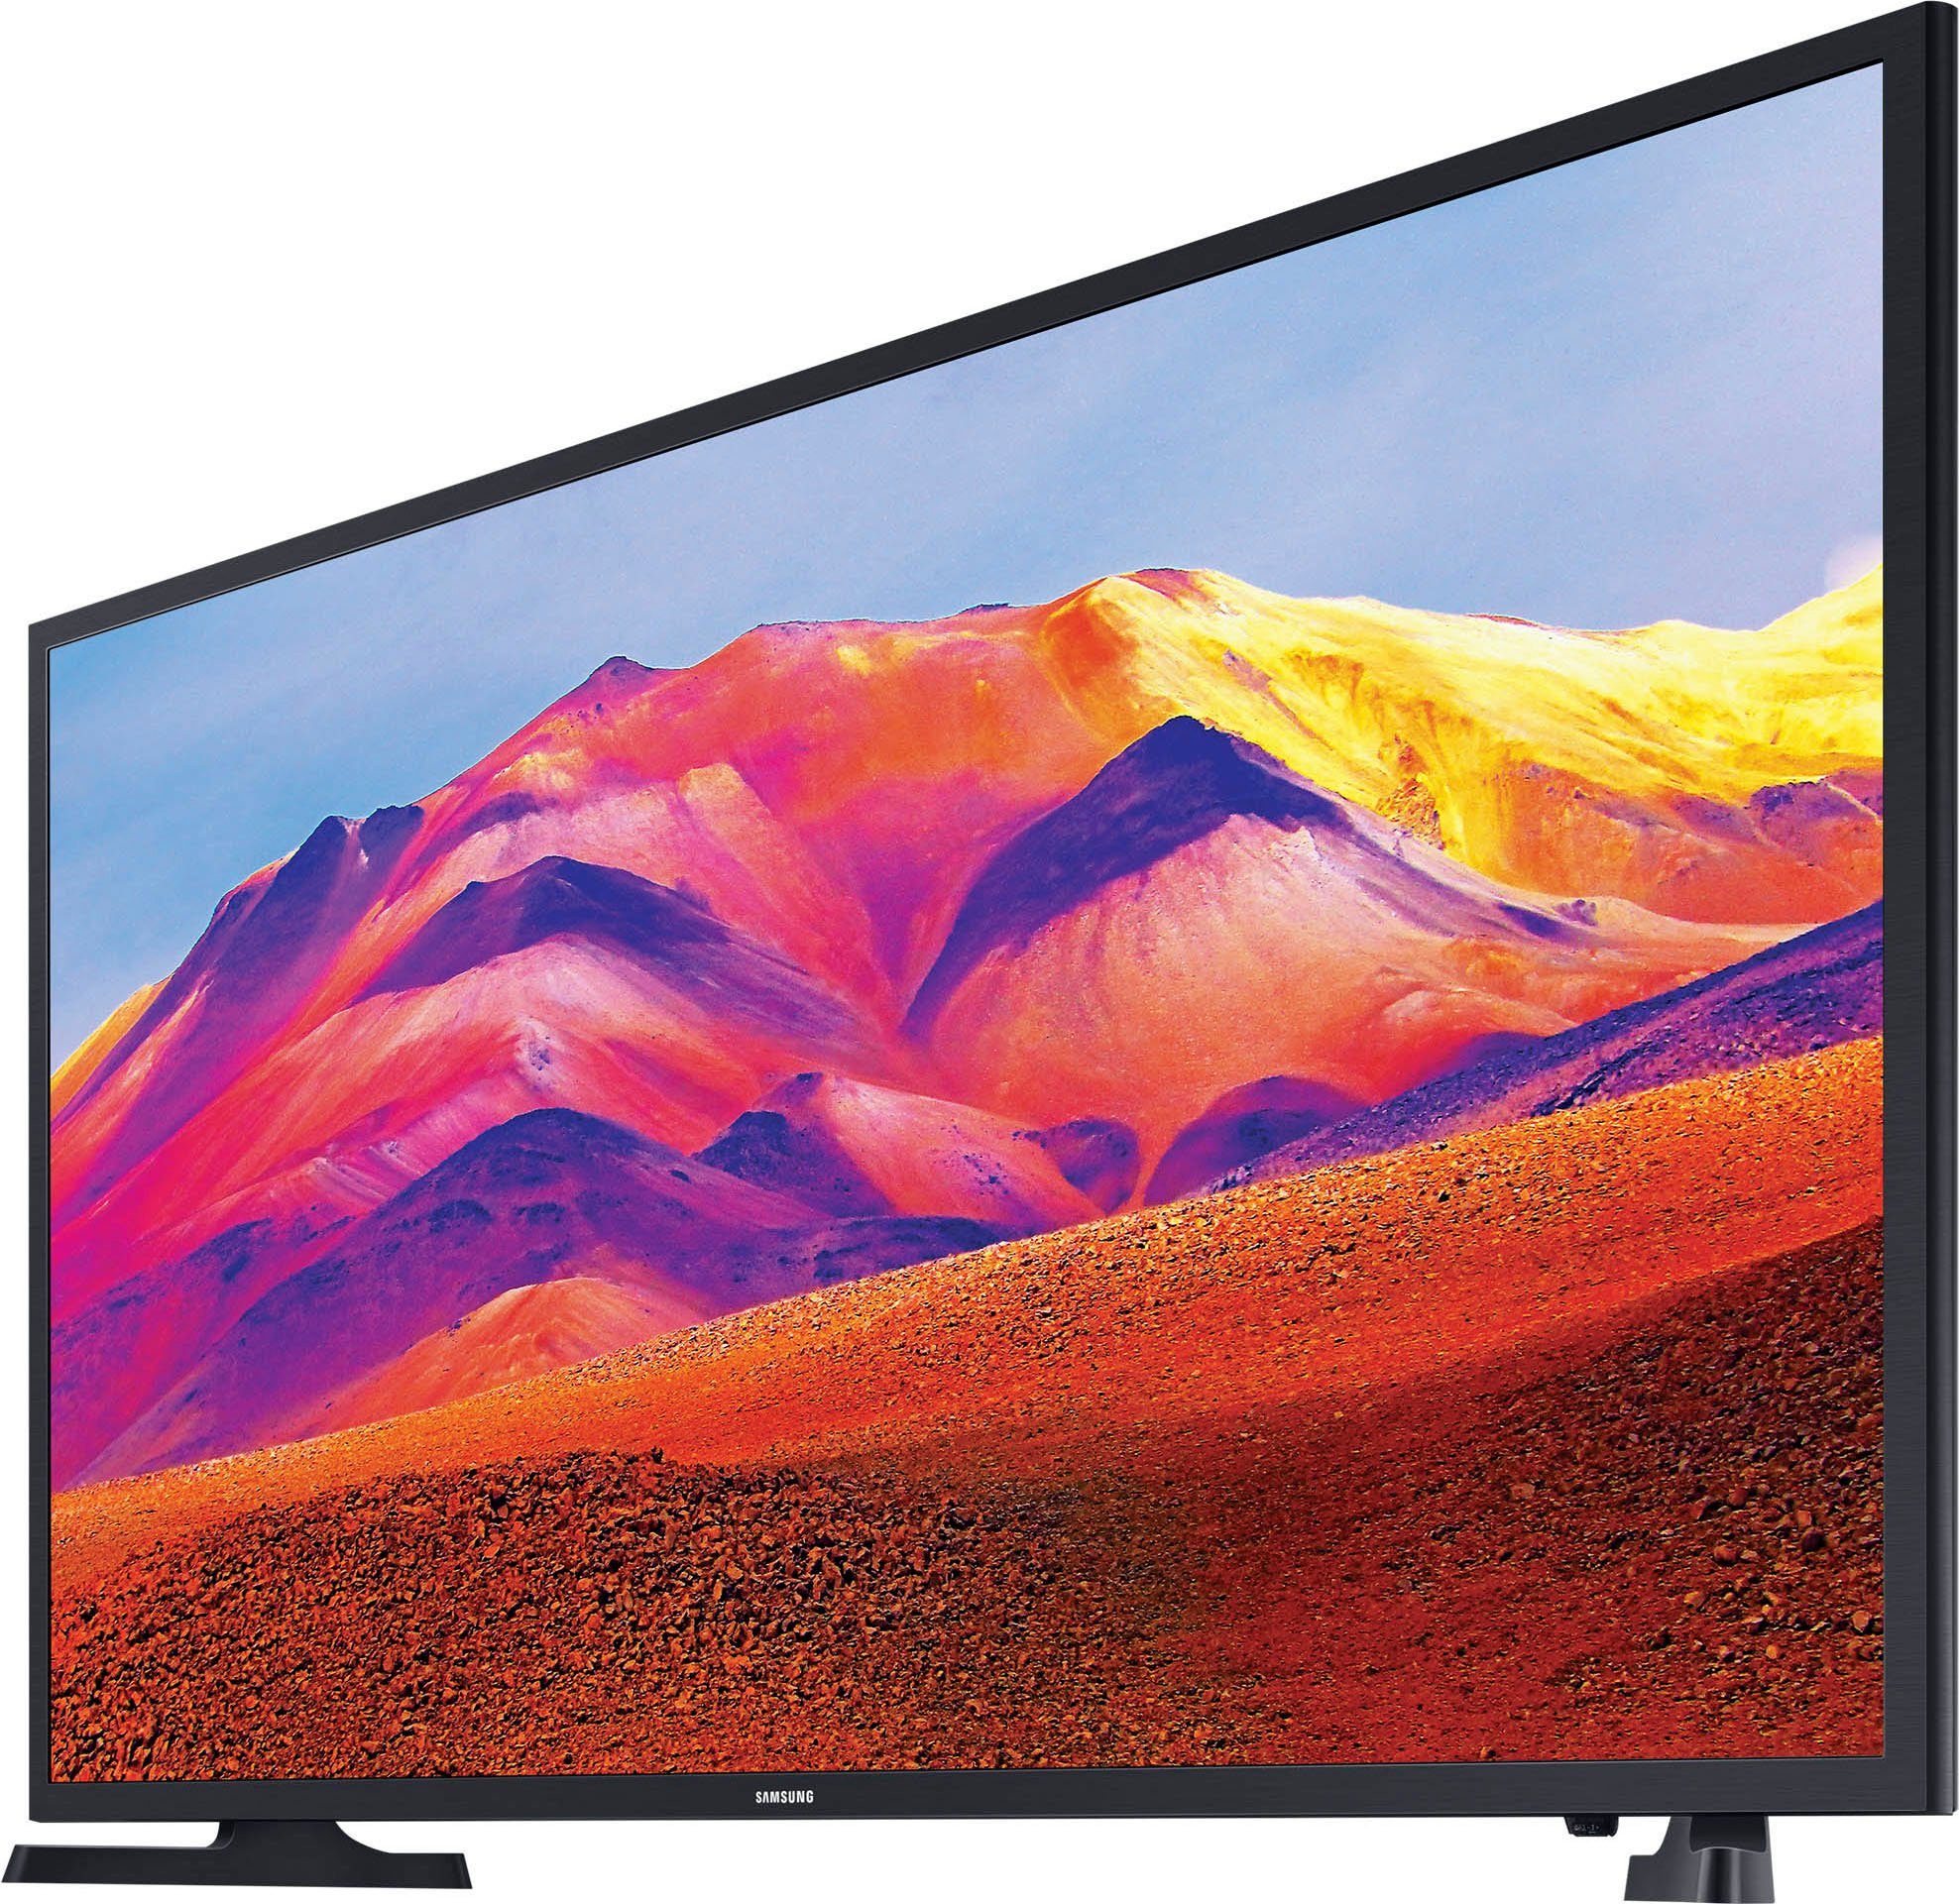 Smart-TV, cm/32 Zoll, PurColor,HDR,Contrast LED-Fernseher Enhancer) Samsung GU32T5379CD (80